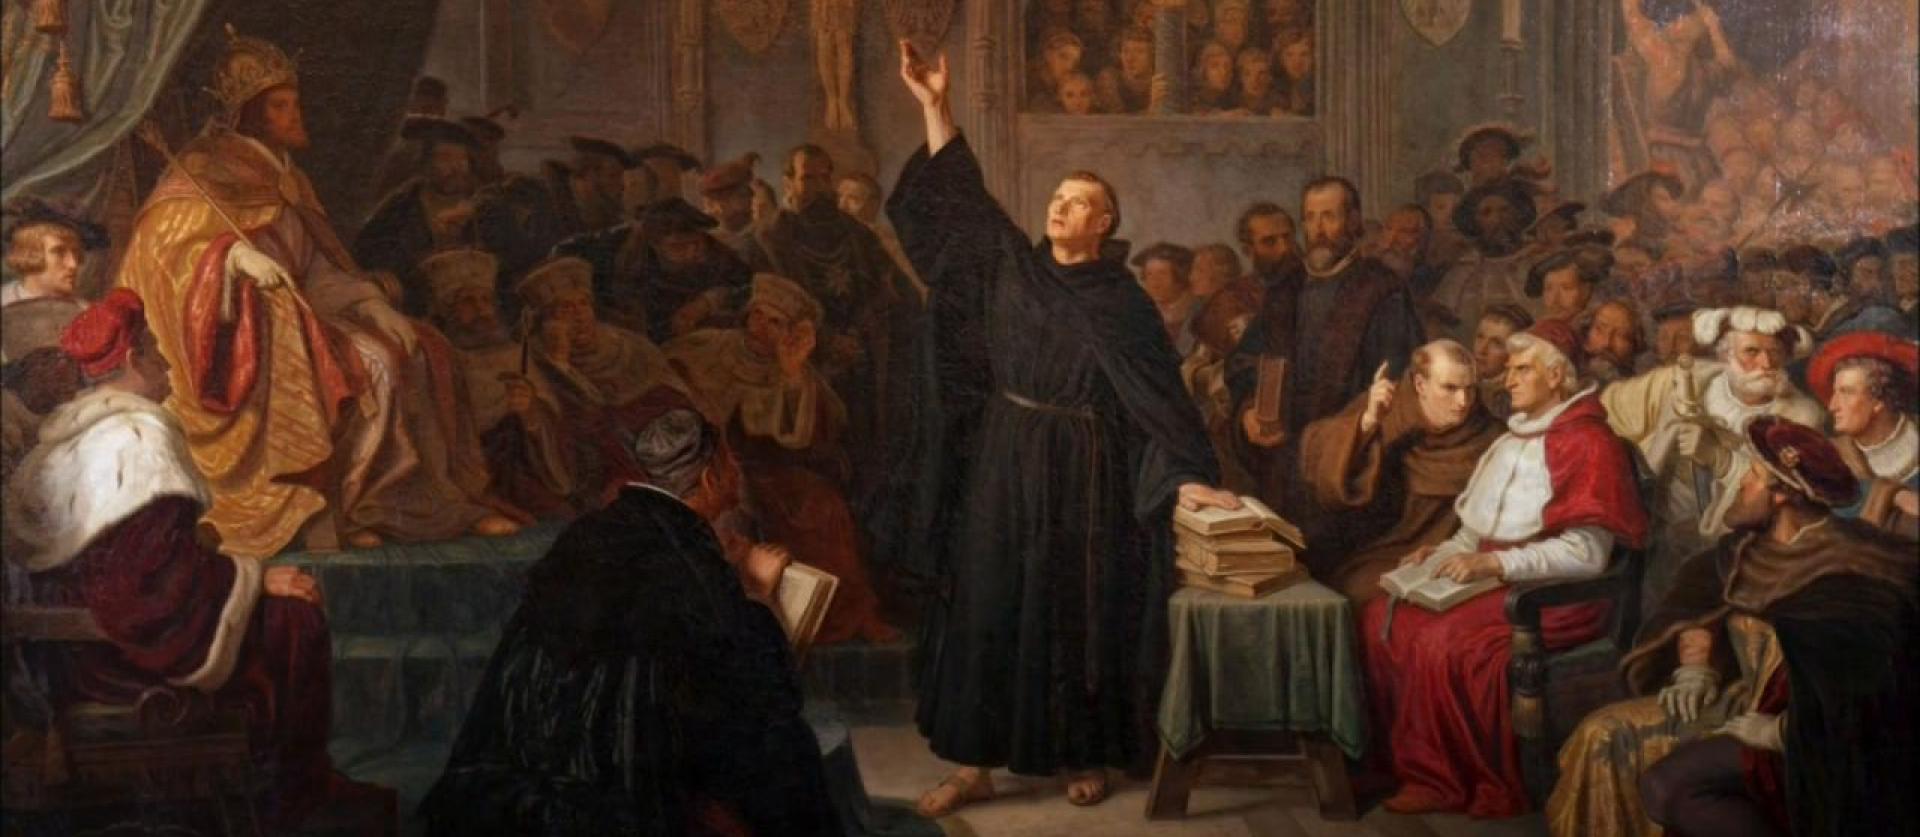 Renascimento E Reforma Protestante - ENSINO